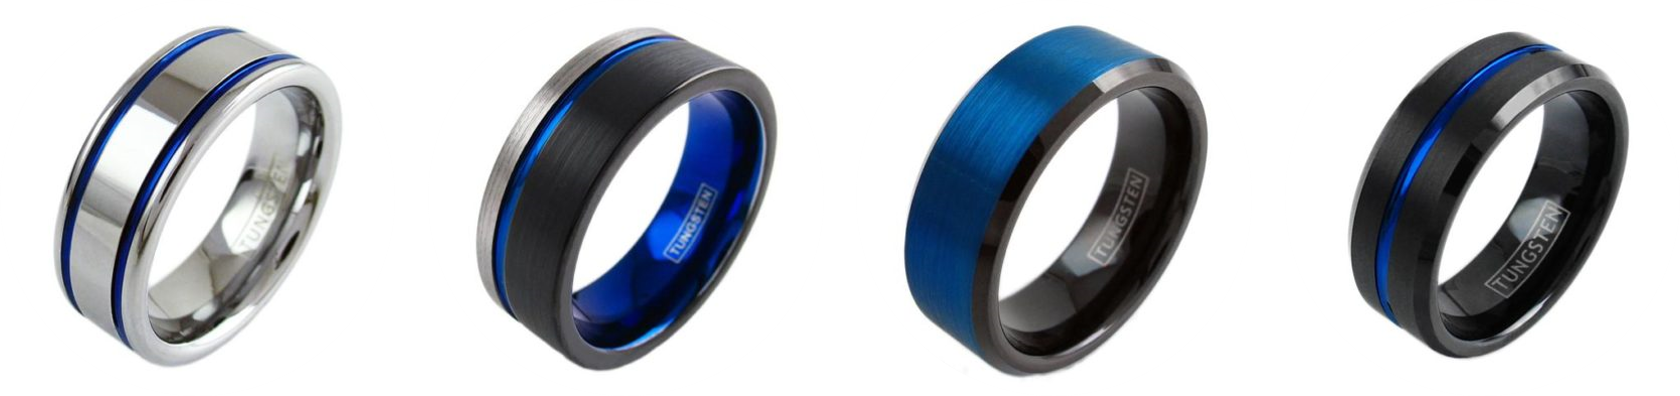 Best Blue Tungsten Rings